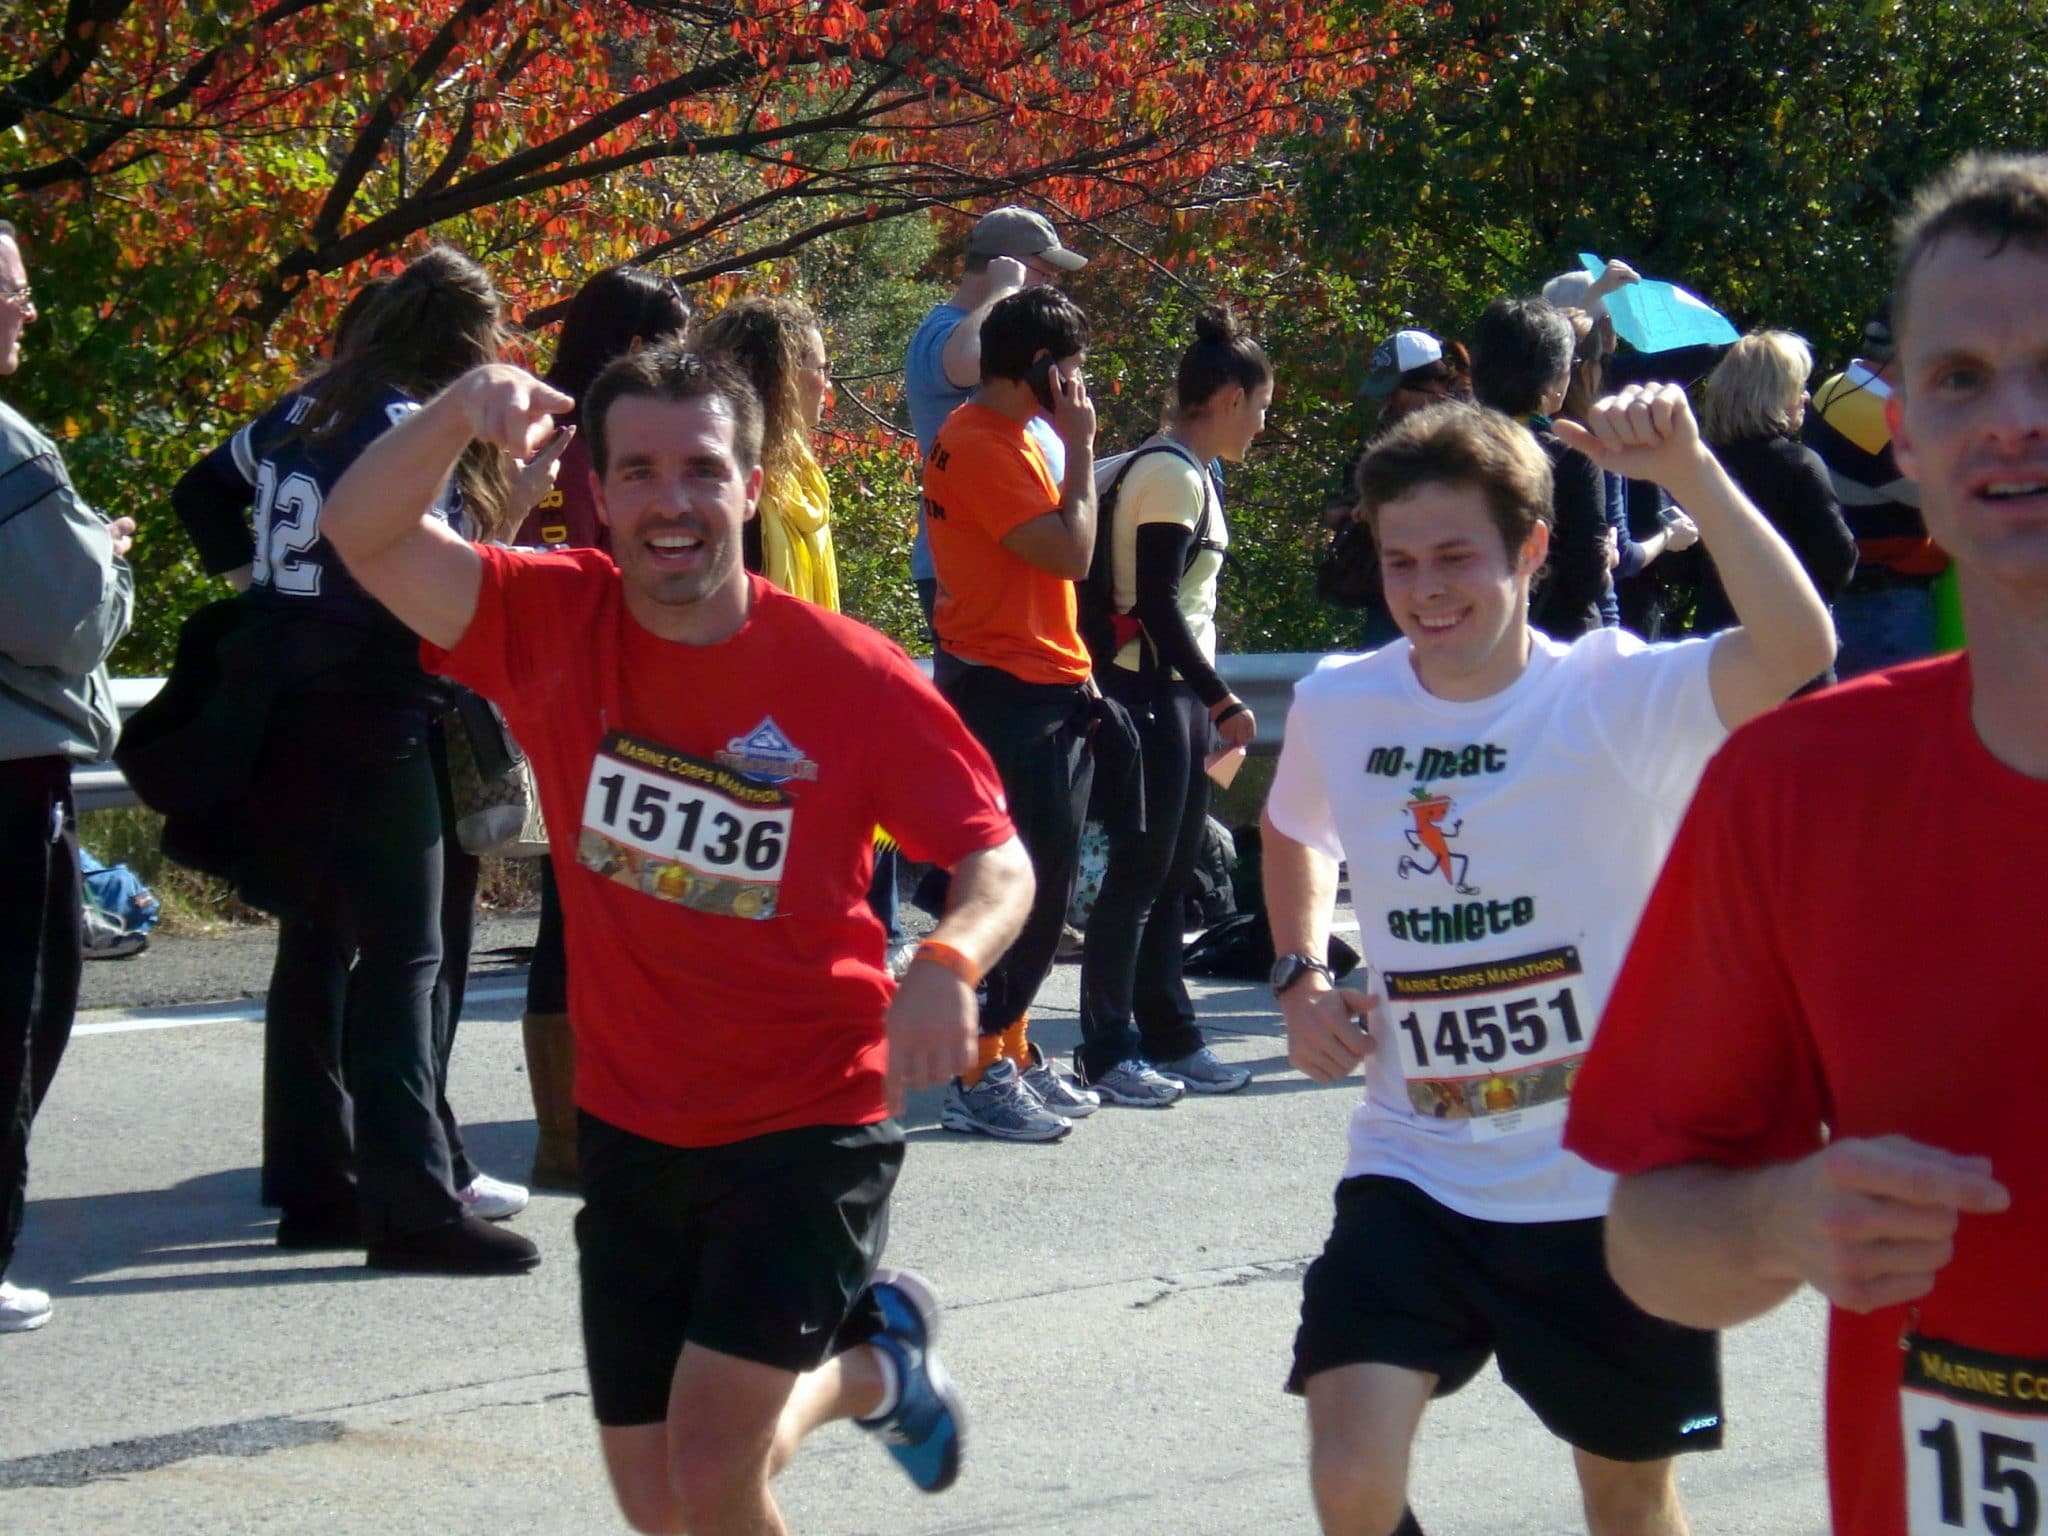 Matt and brother in law running Marine Corps Marathon 2010